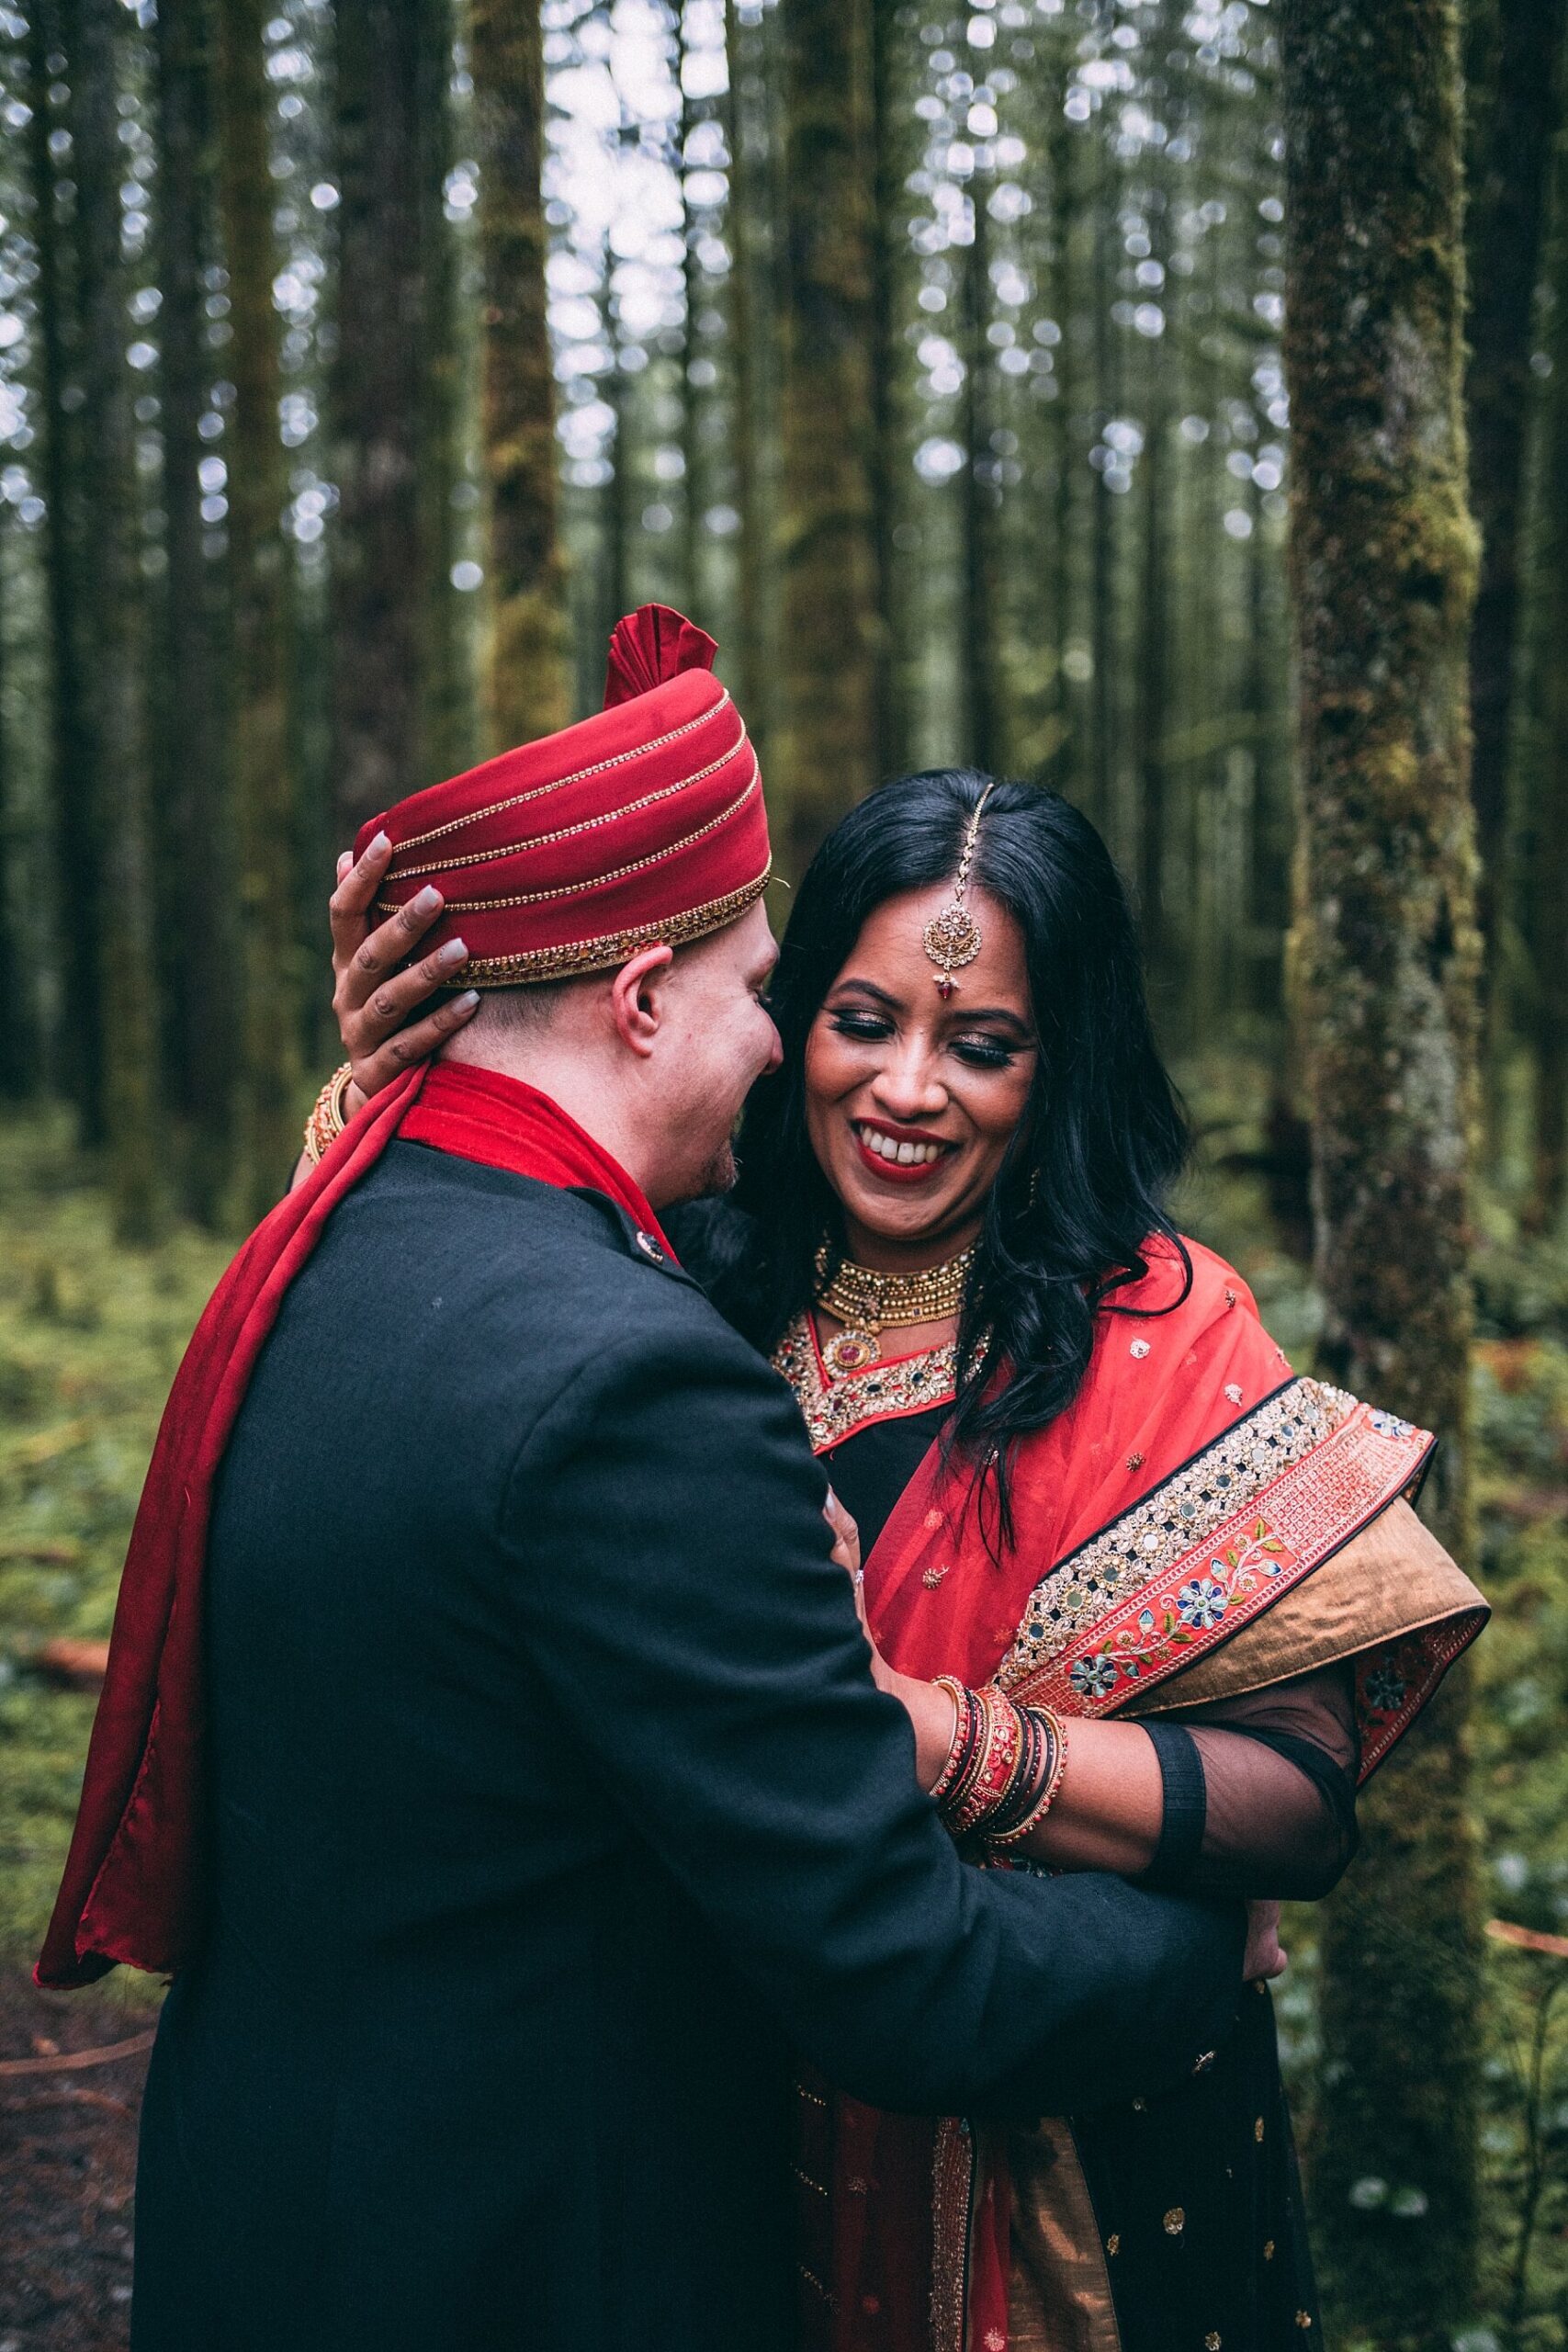 Golden Ears Provincial Park Elopement Wedding photos